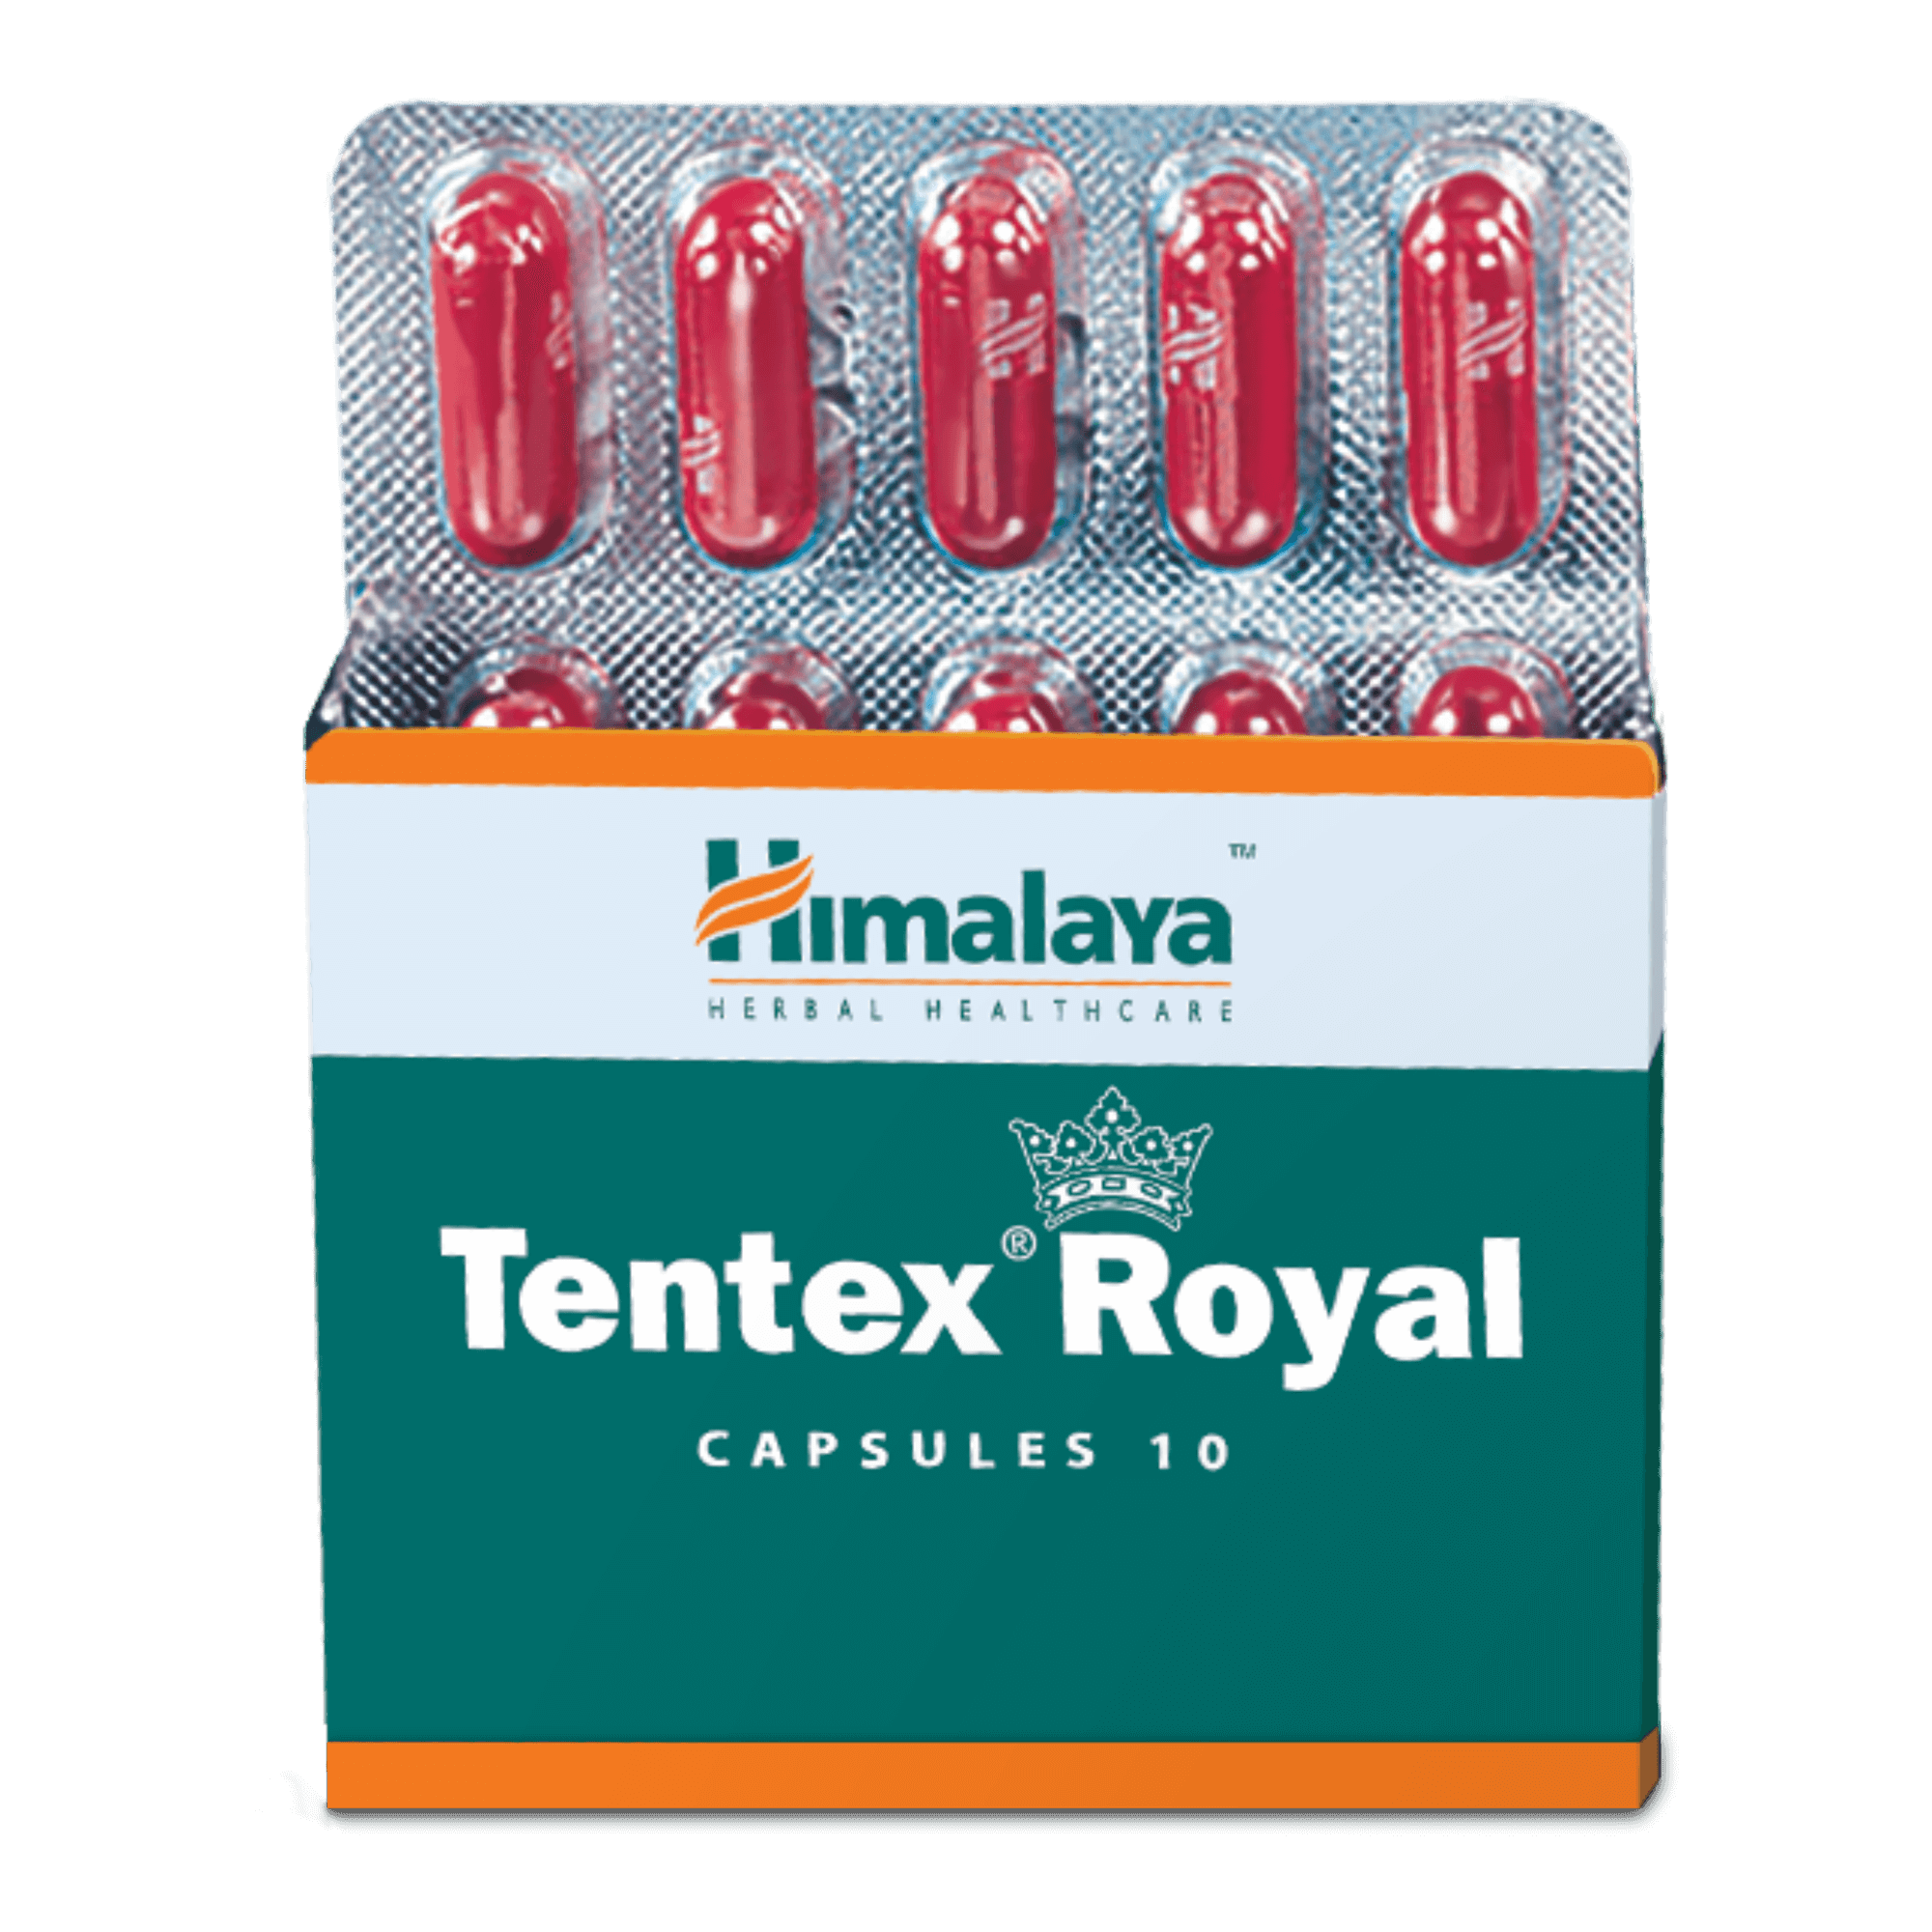 Himalaya Tentex Royal Capsules 10's - Manages Erectile Dysfunction